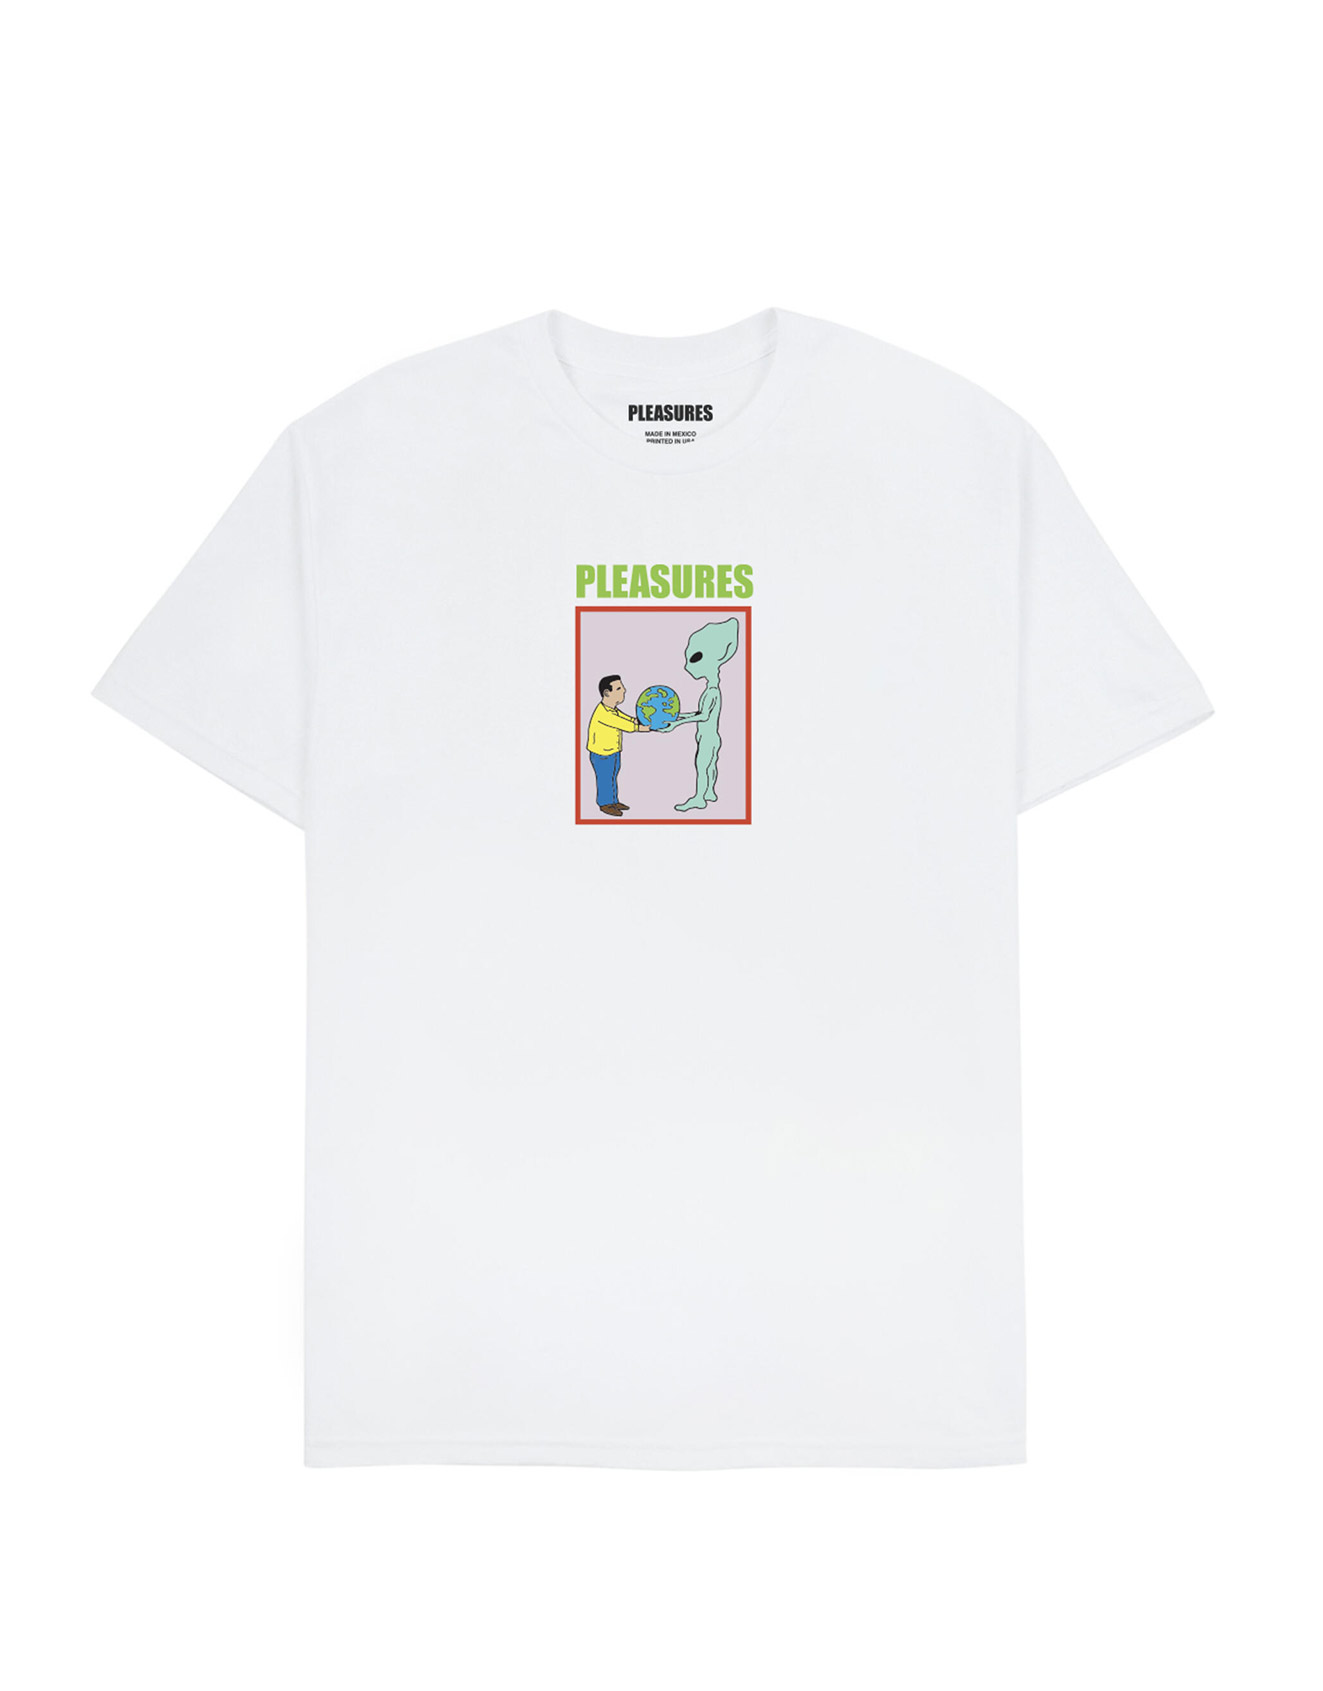 PLEASURES – Gift t-shirt